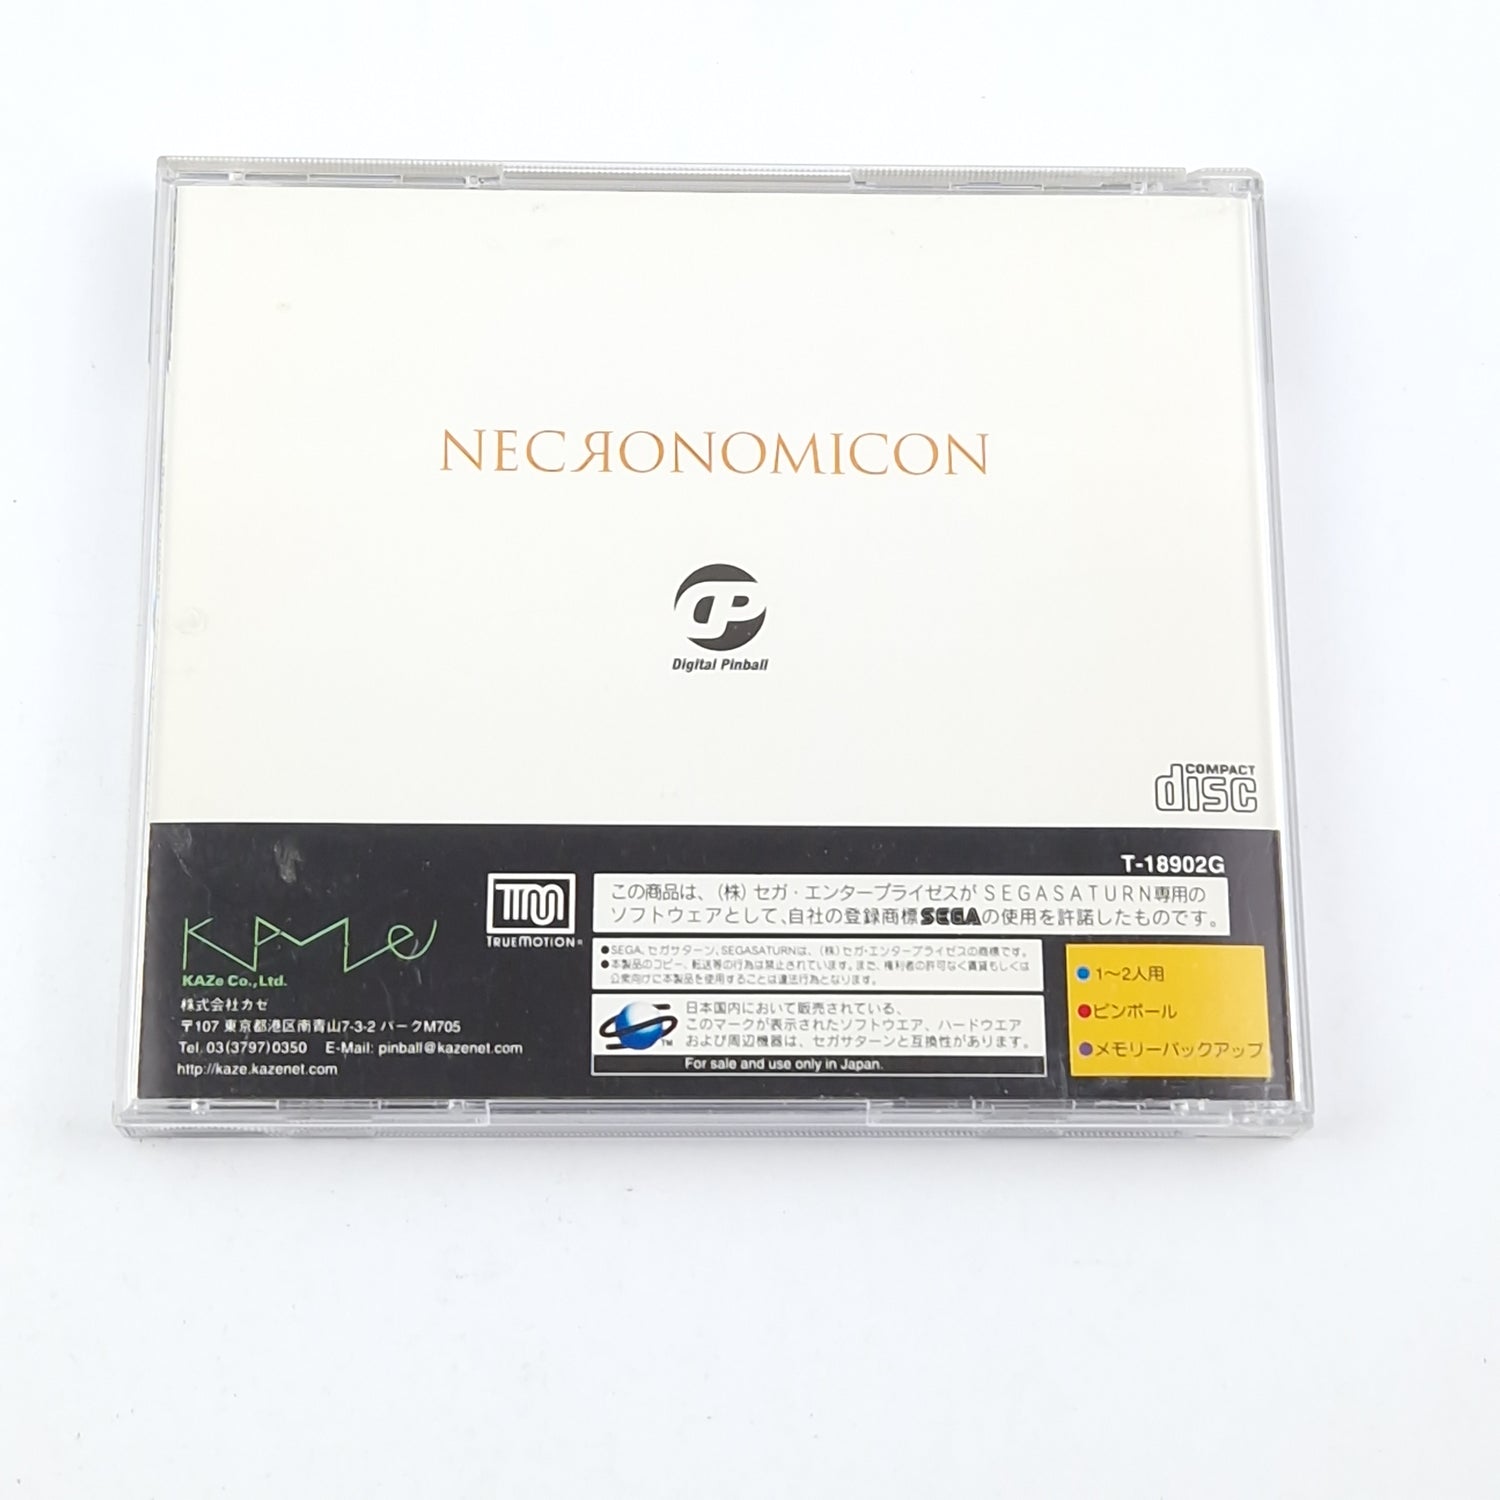 Sega Saturn Game: Necronomicon - OVP Instructions CD / NTSC-J JAPAN Version